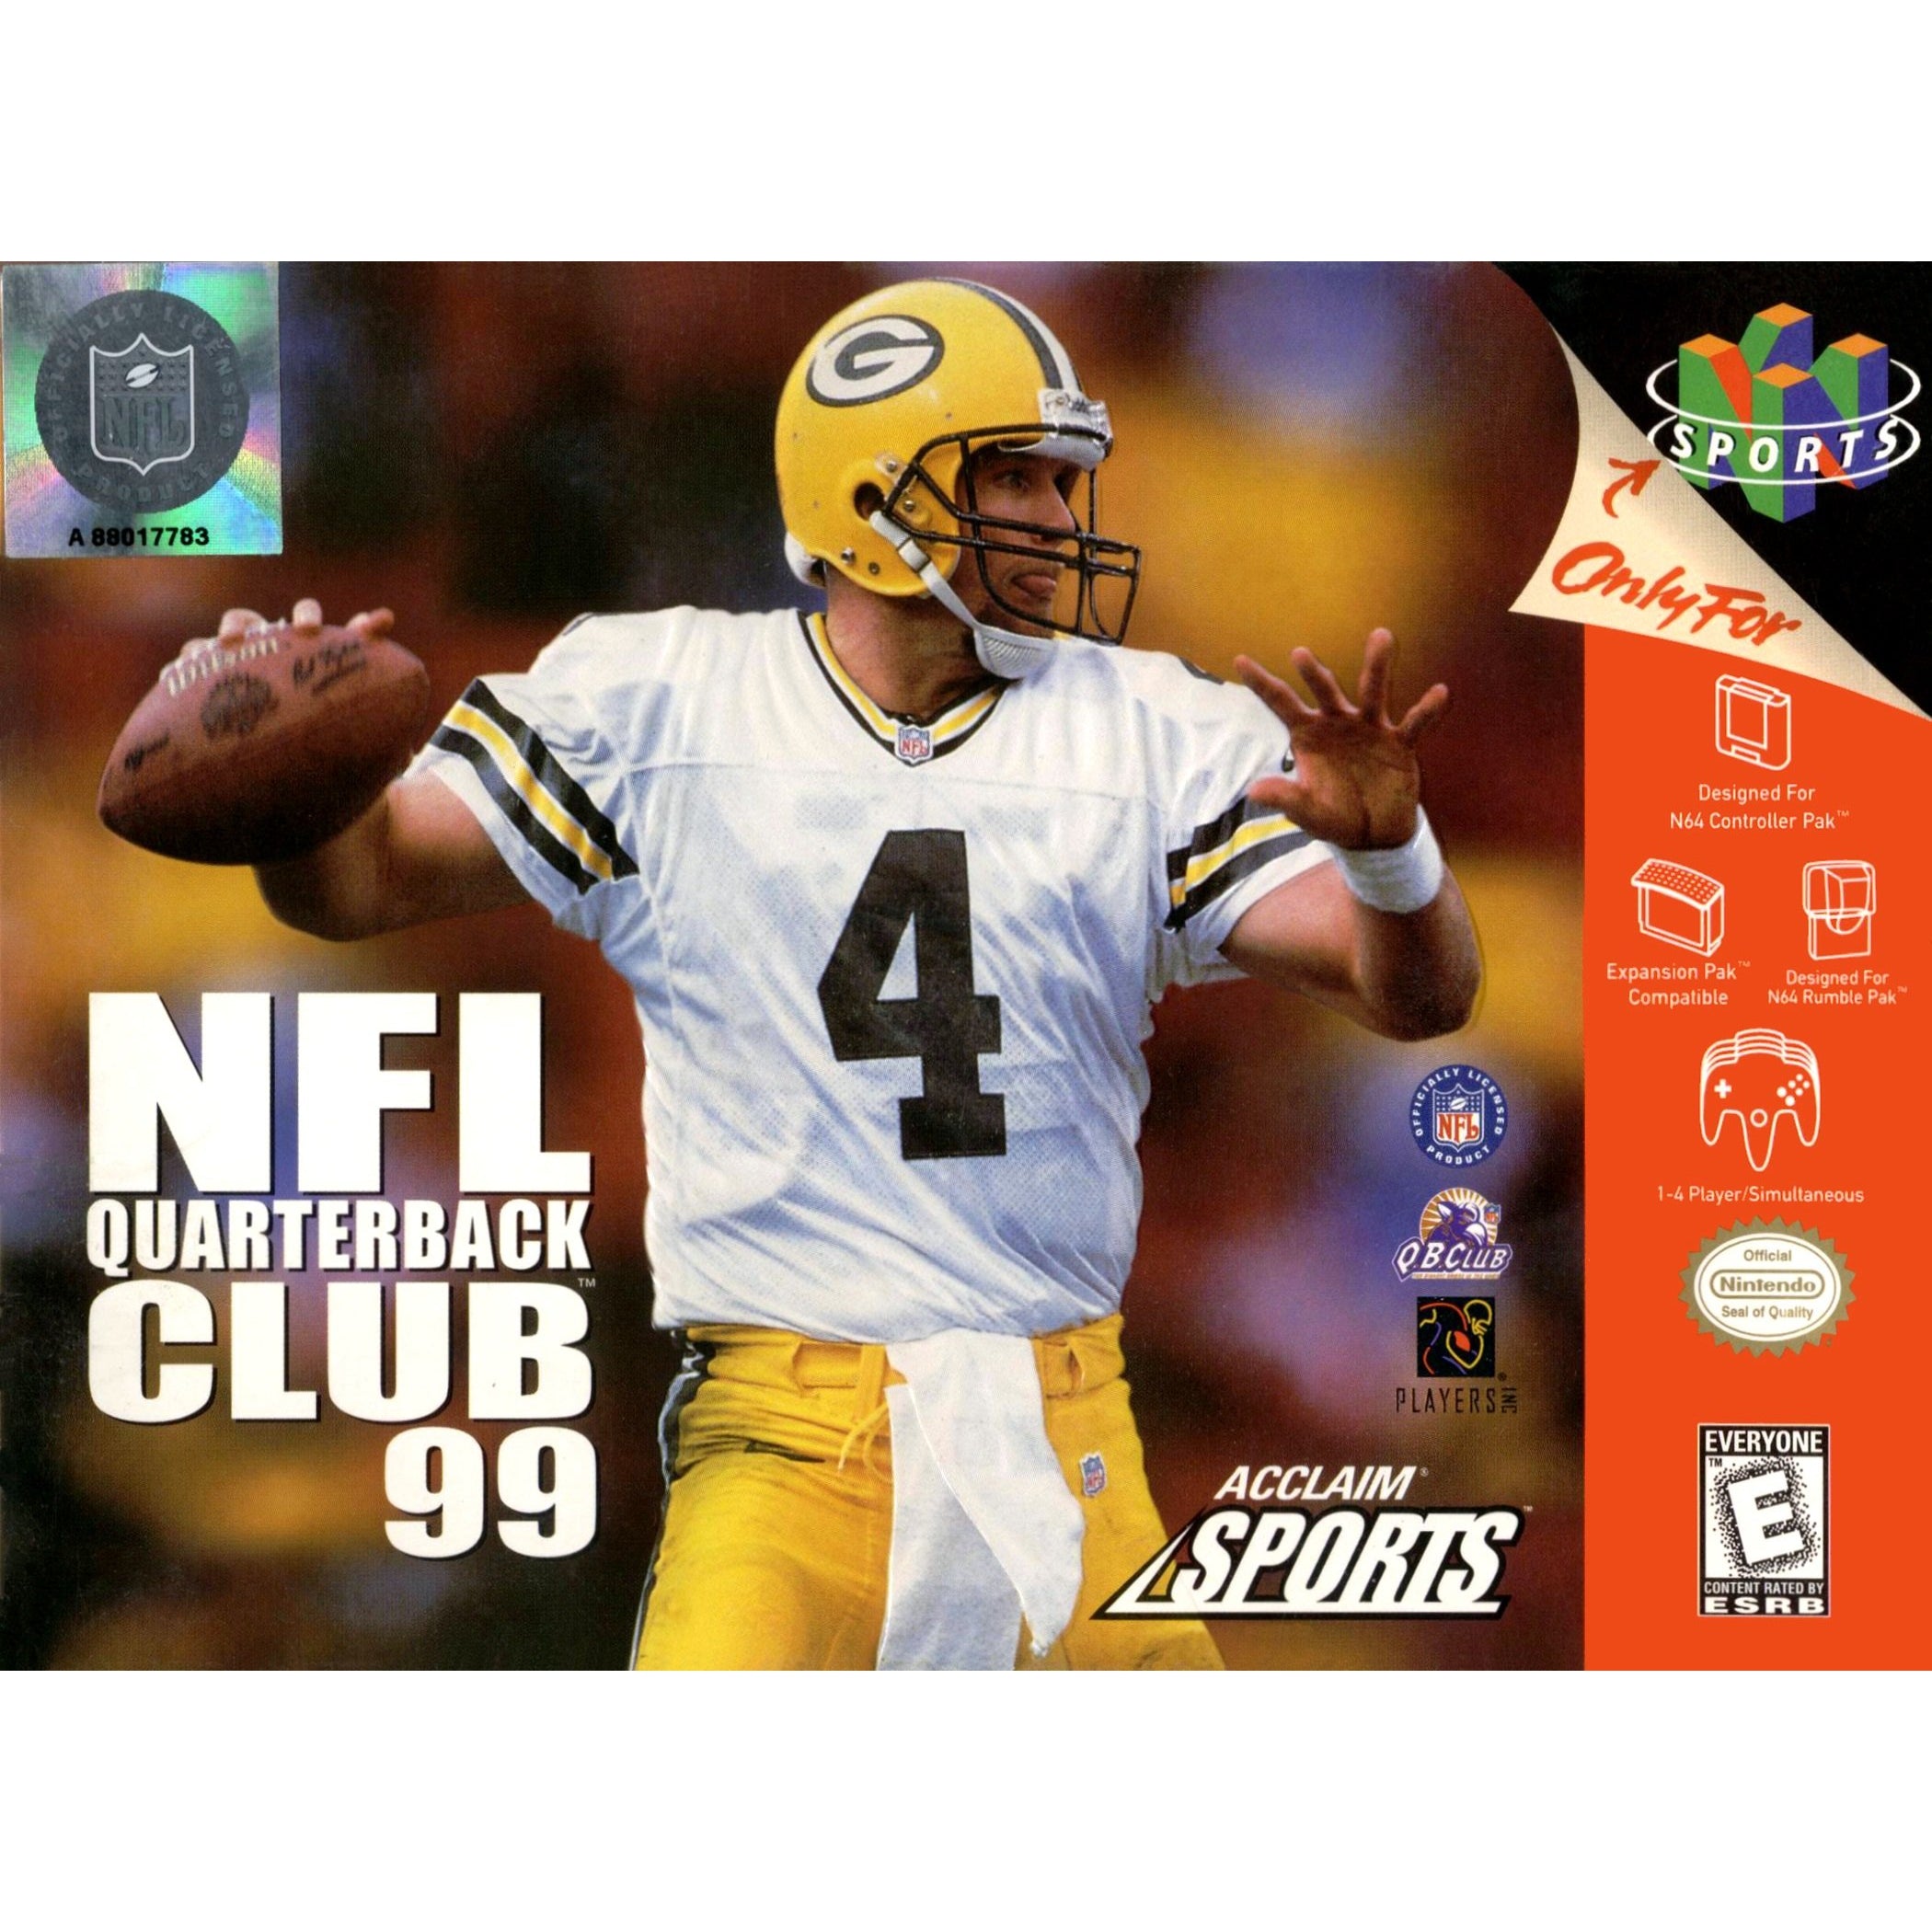 Your Gaming Shop - NFL Quarterback Club 99 - Authentic Nintendo 64 (N64) Game Cartridge